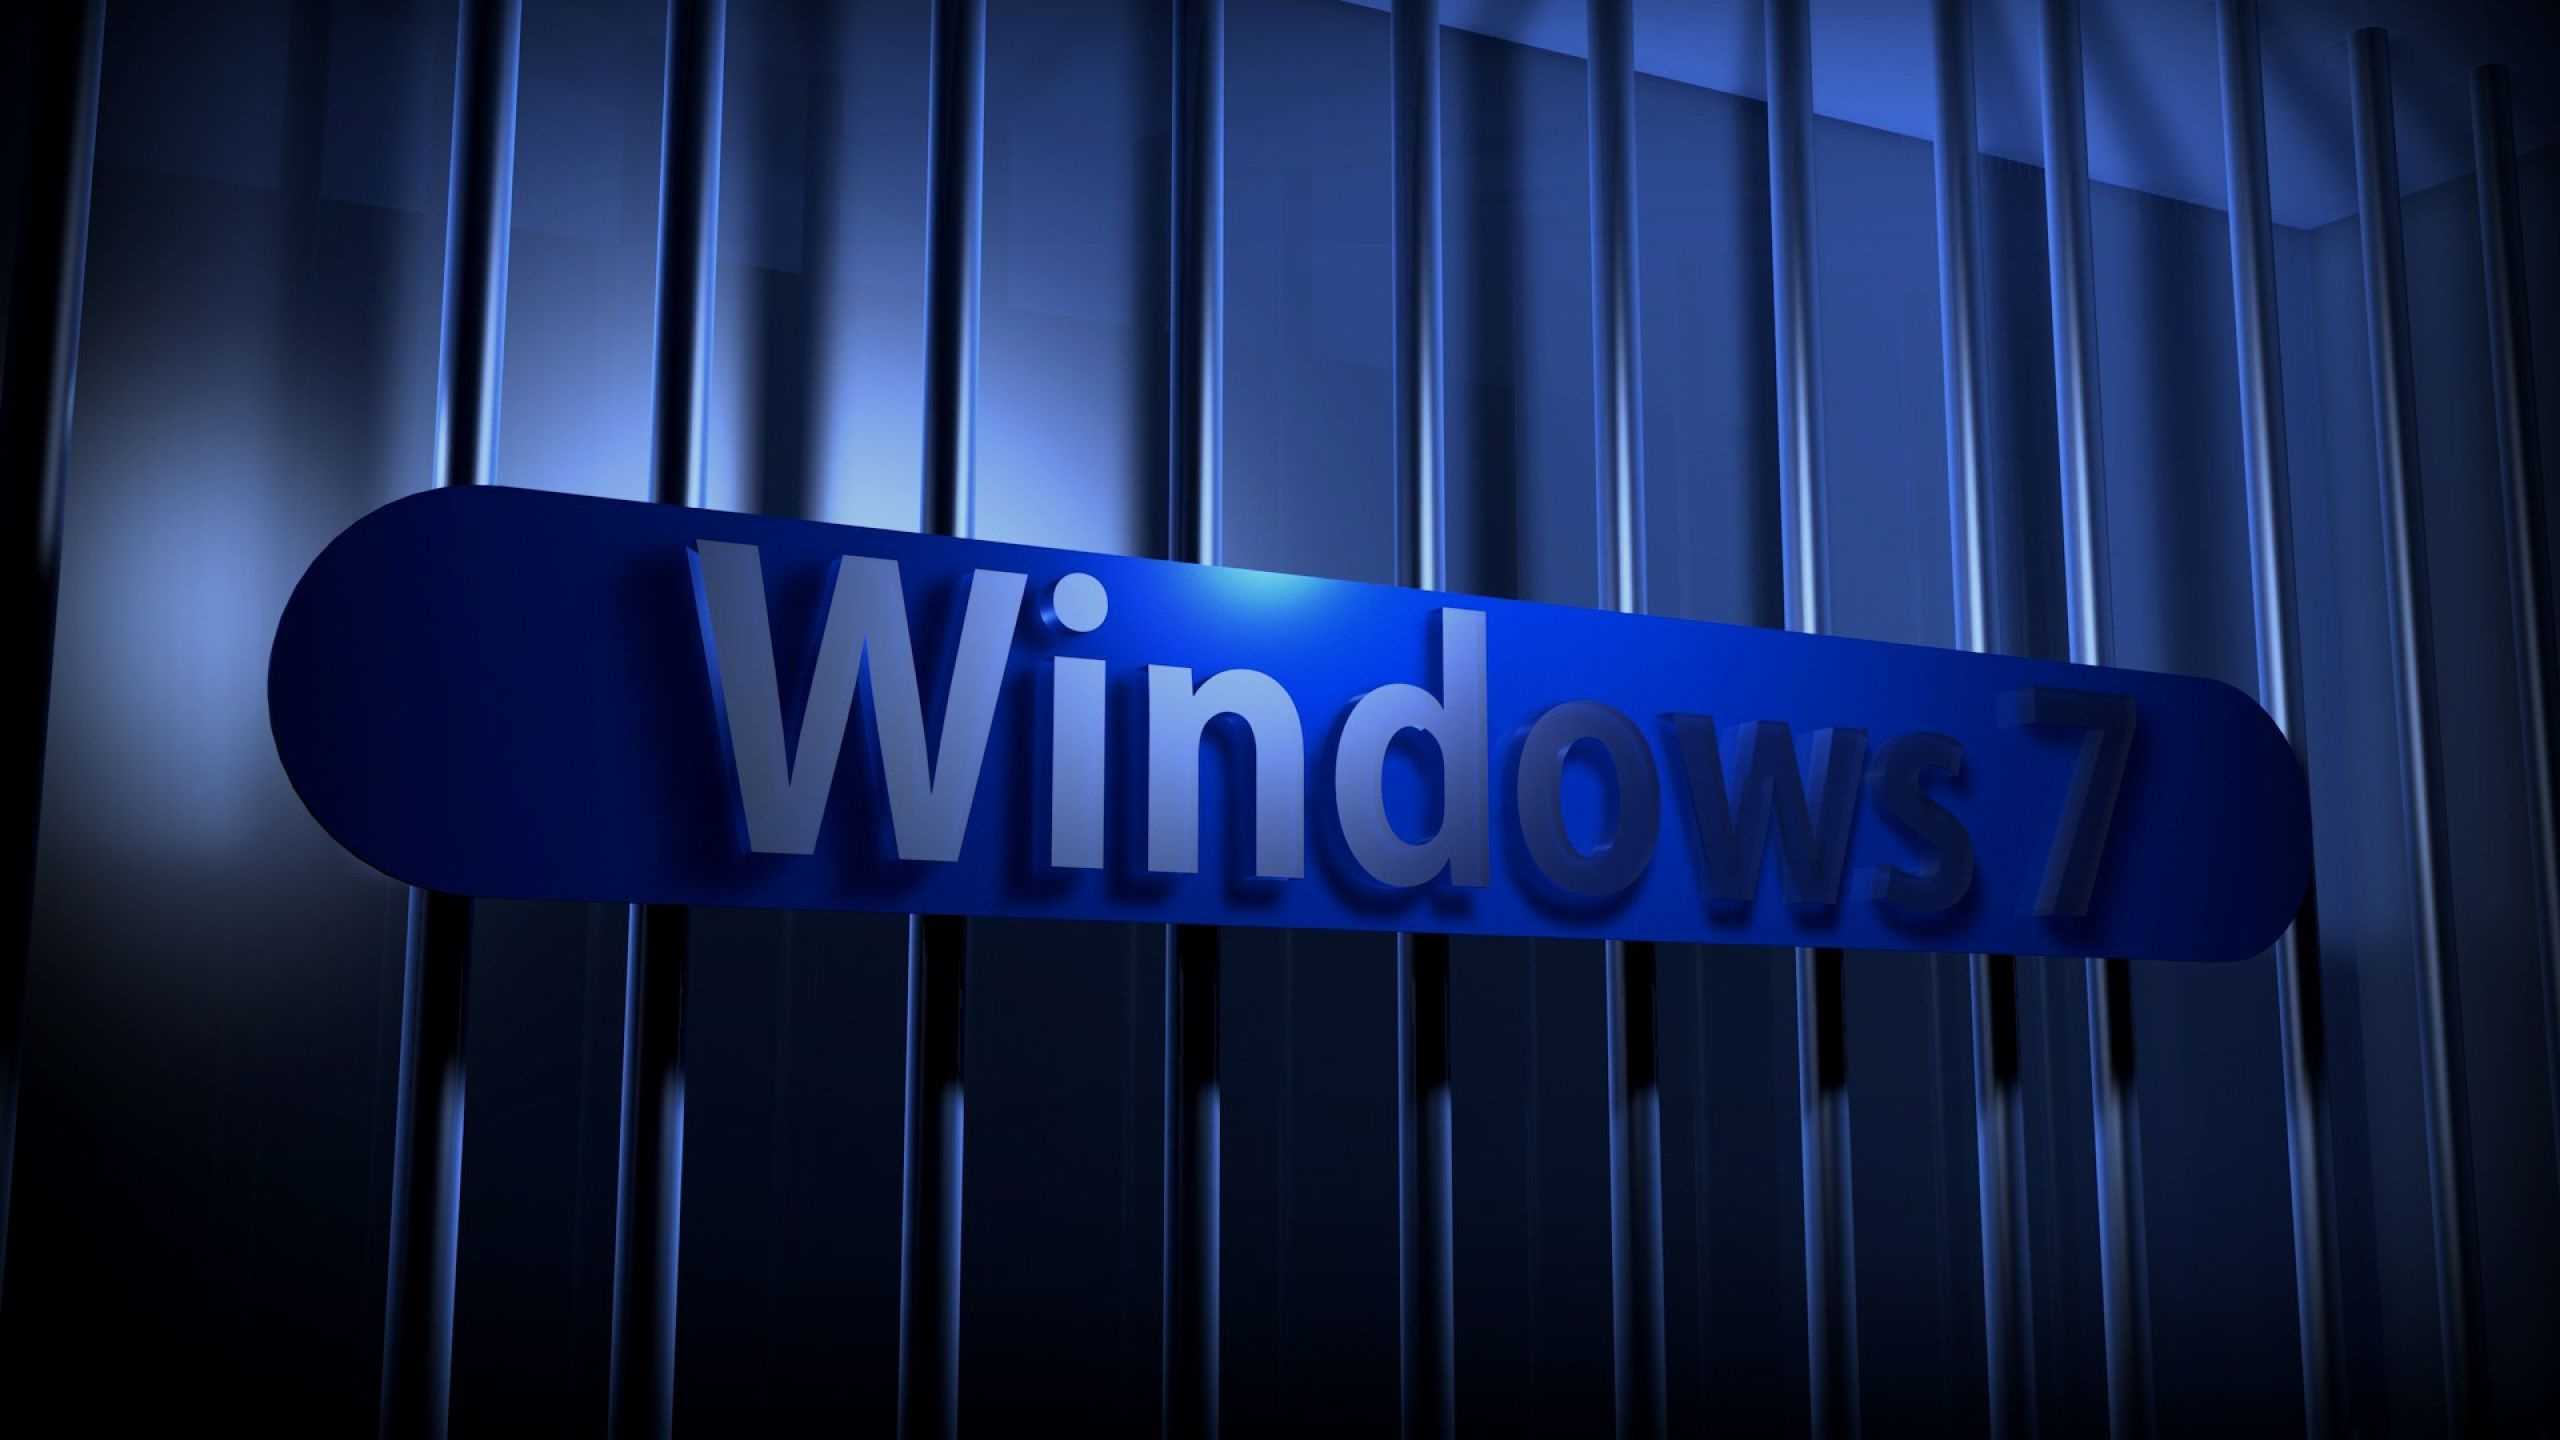 Windows 7, Azul, Luz, Logotipo, Windows 10. Wallpaper in 2560x1440 Resolution